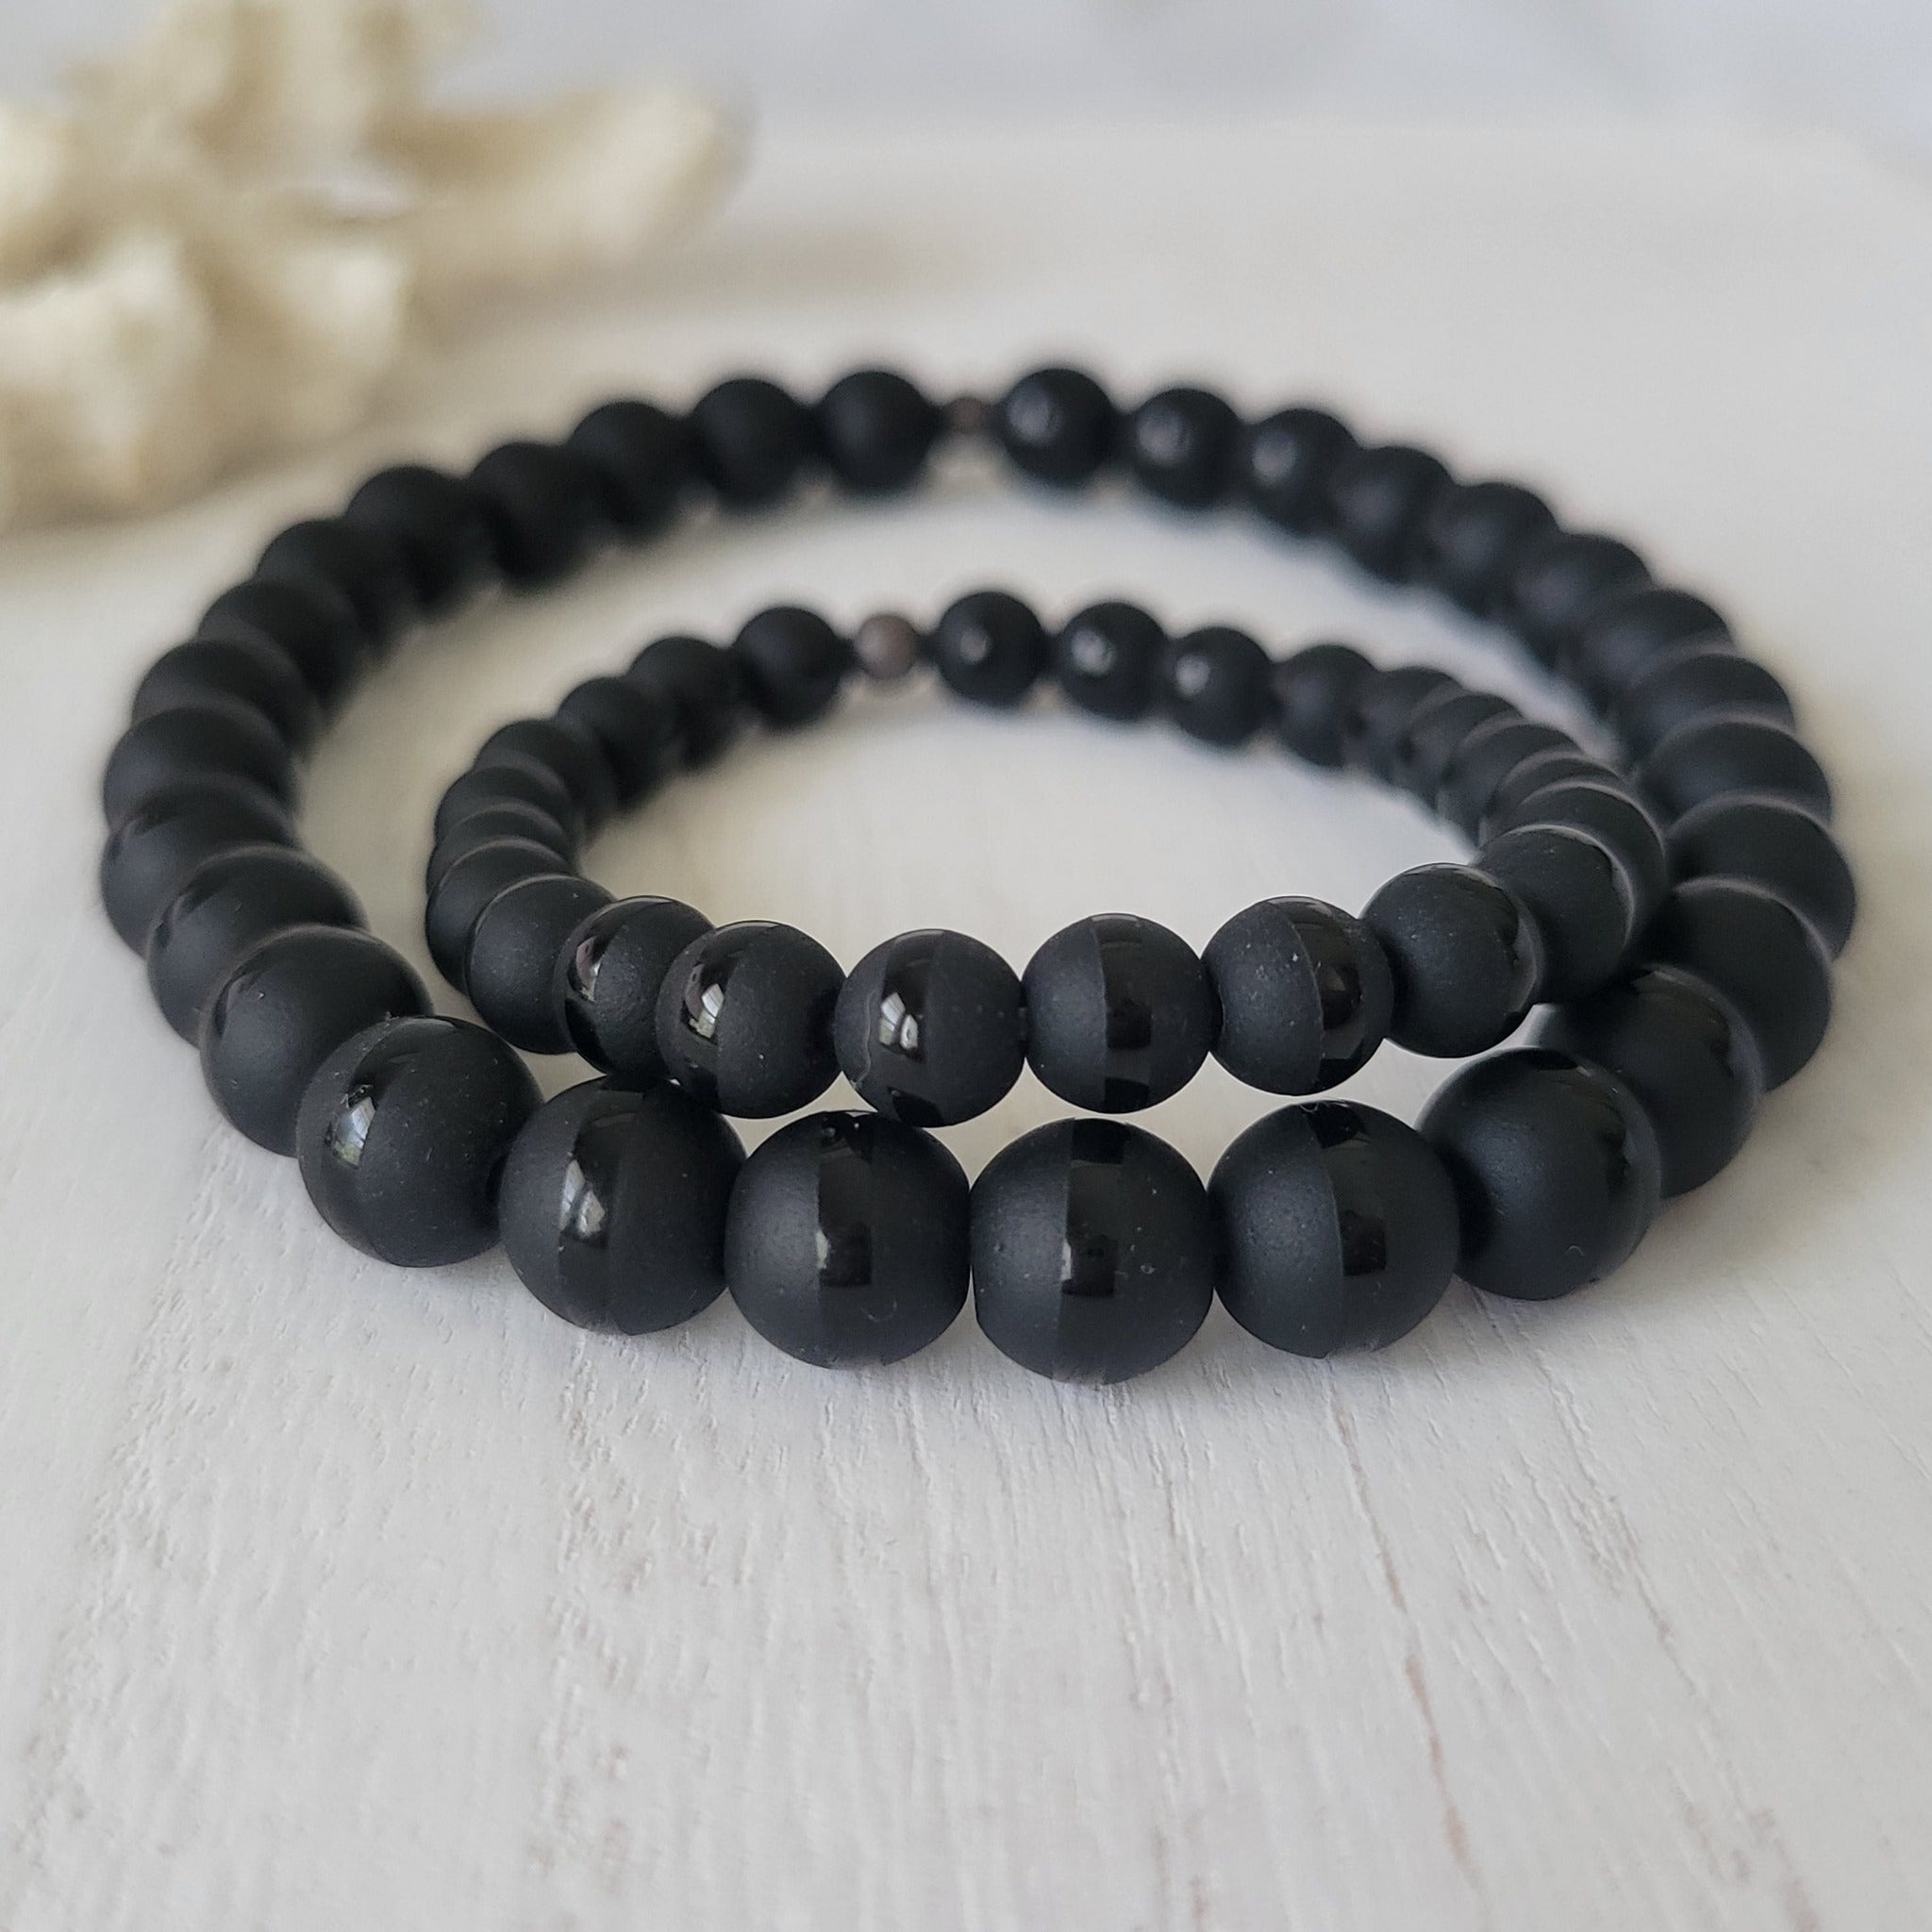 "Black Dapper" Men's Matte Onyx Stone Bead Name Bracelet - Medium 8mm Beads